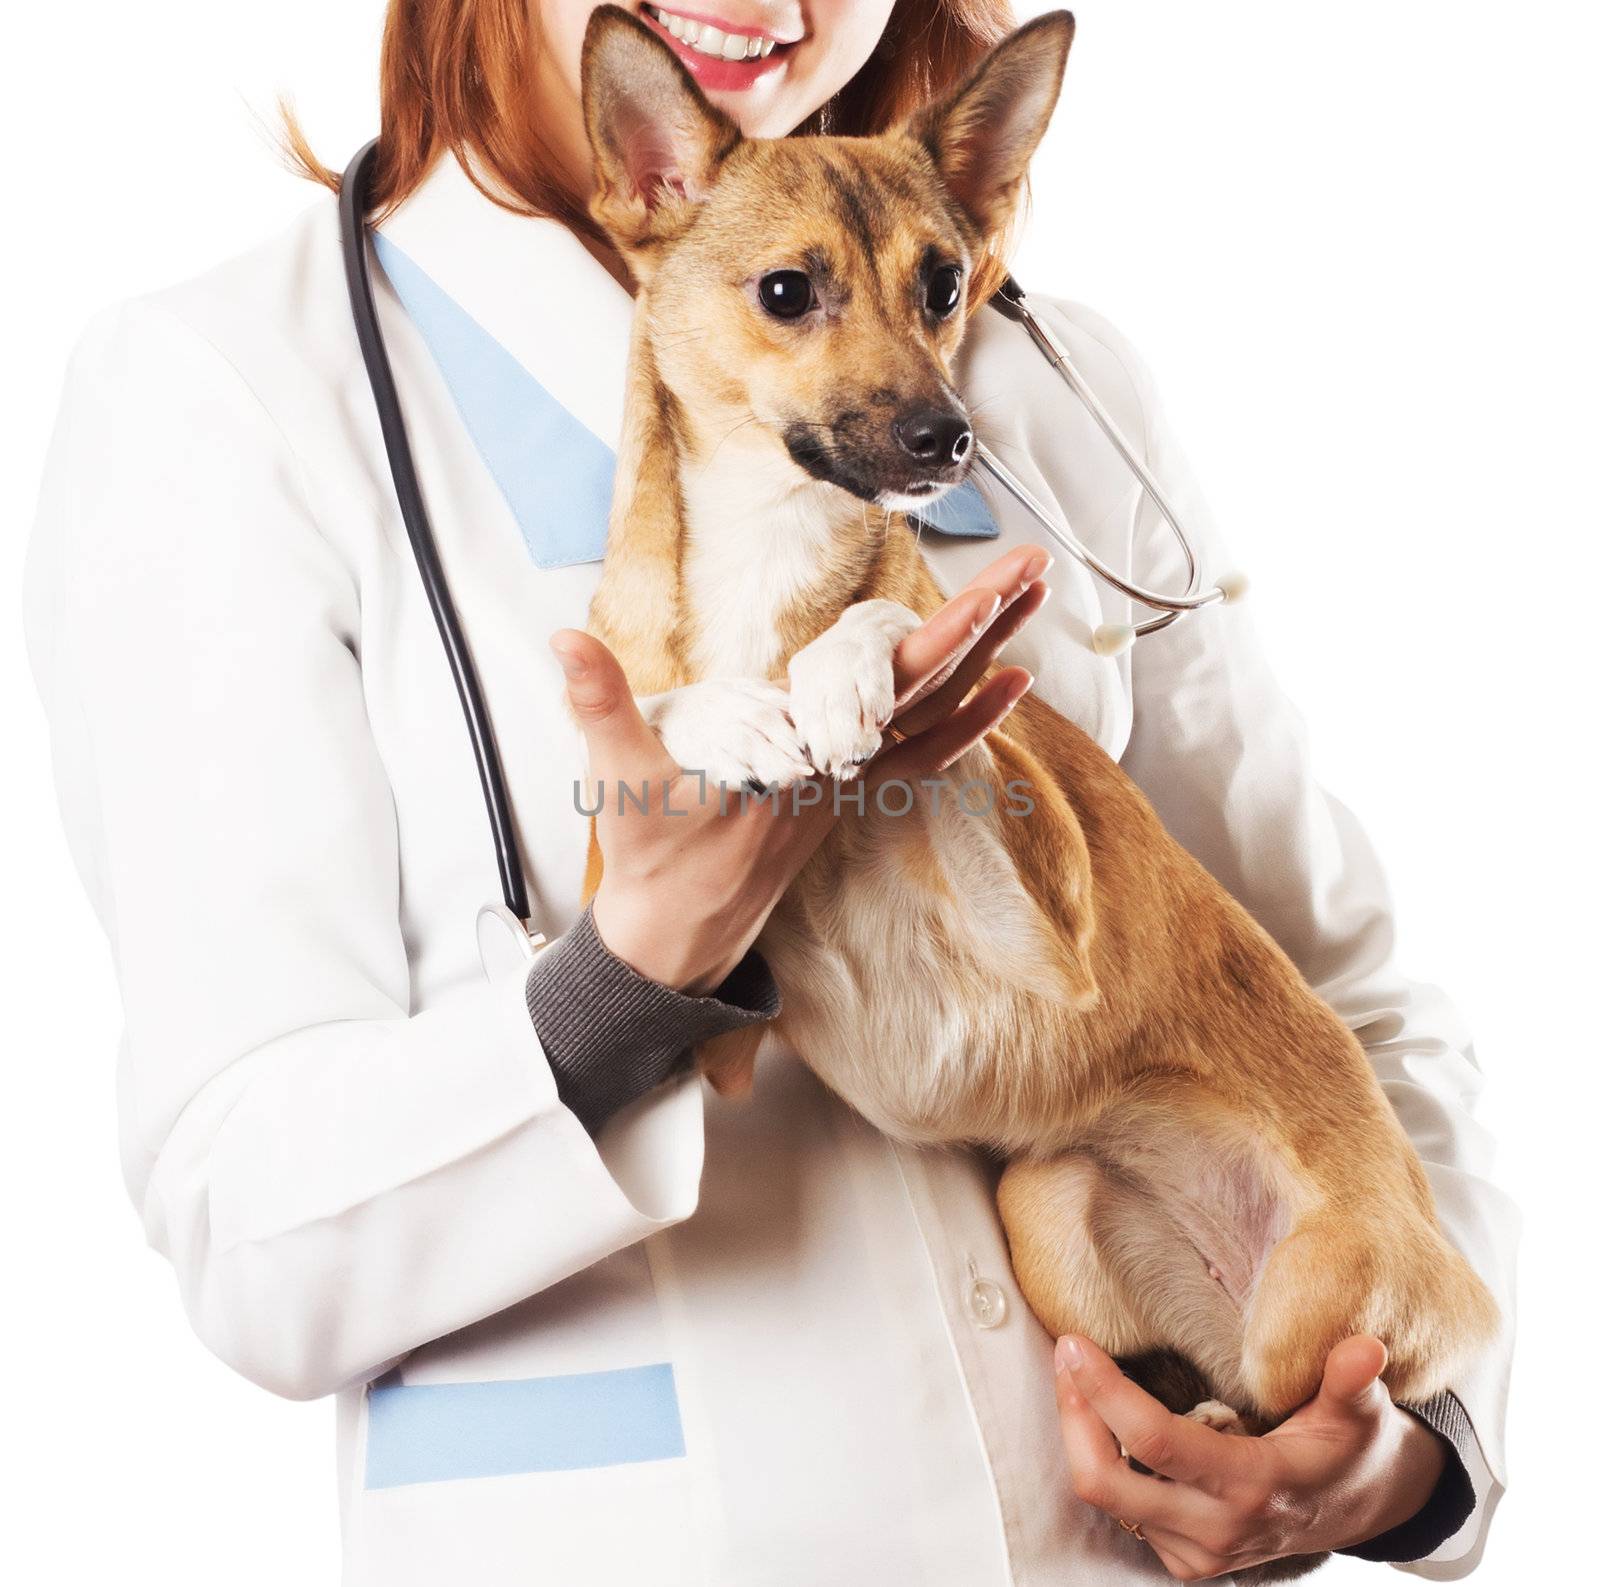 veterinarian with a dog  by gurin_oleksandr